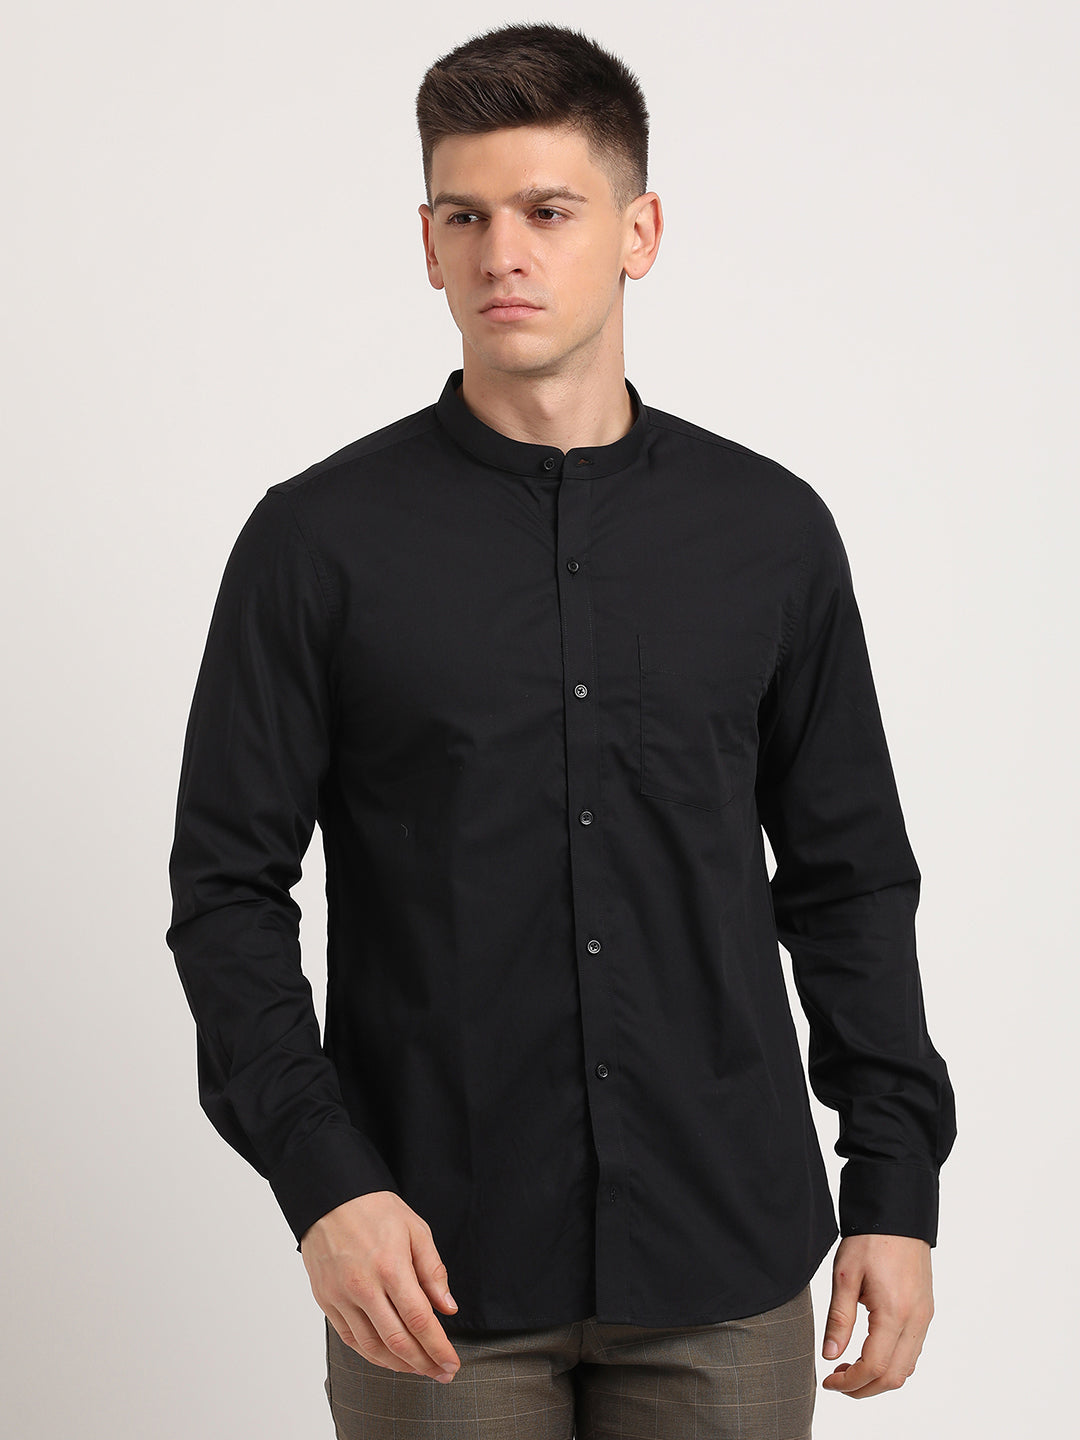 100% Cotton Black Plain Slim Fit Full Sleeve Formal Shirt